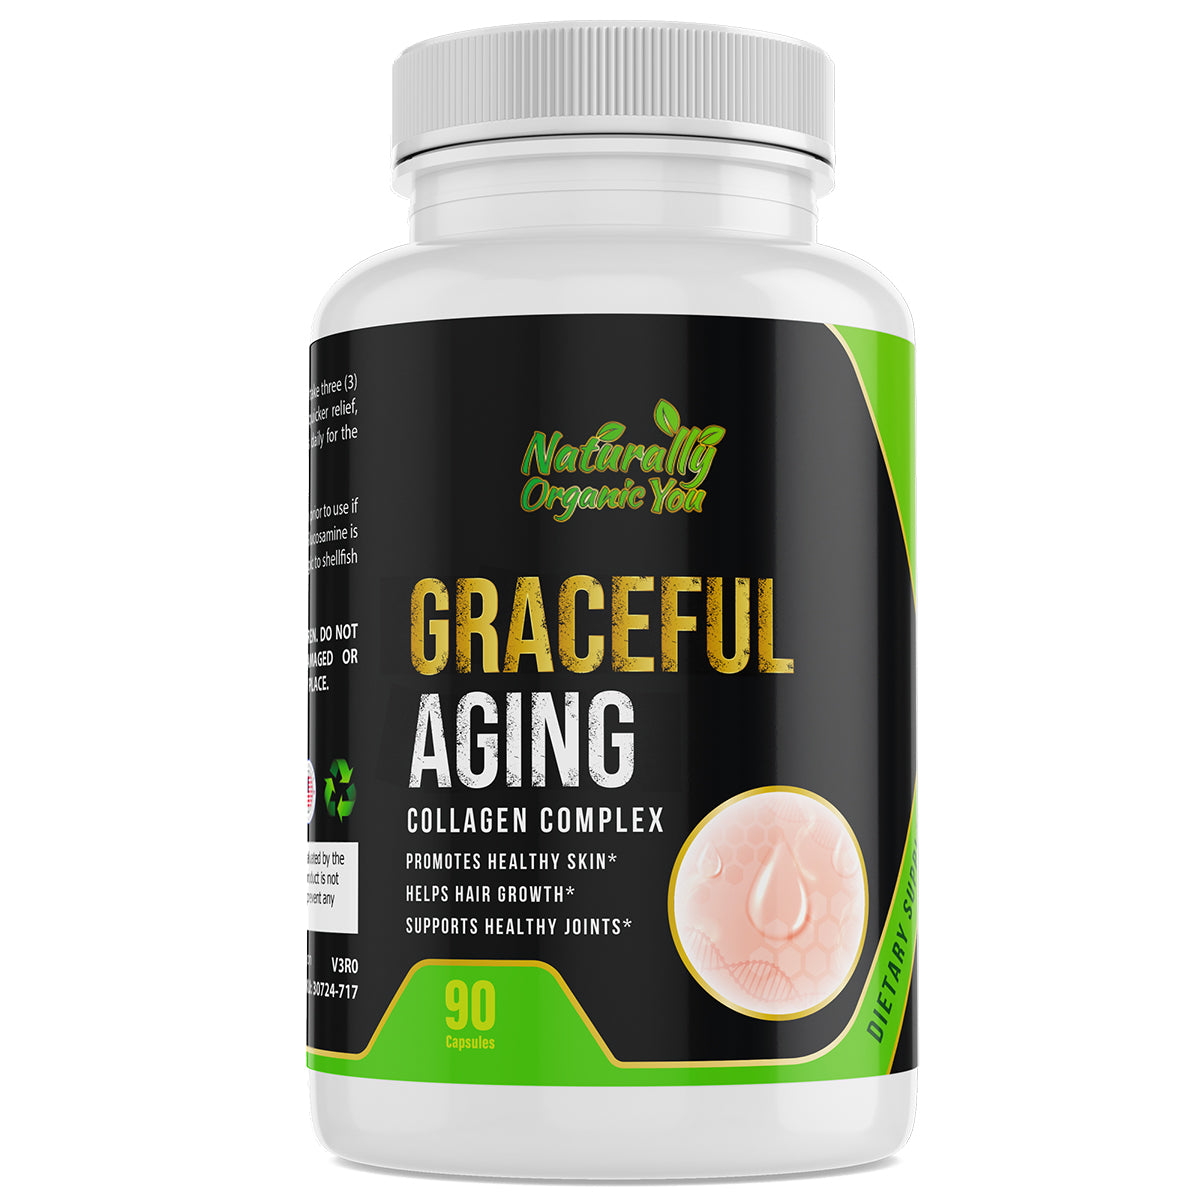 GRACEFUL AGING (Collagen Complex)